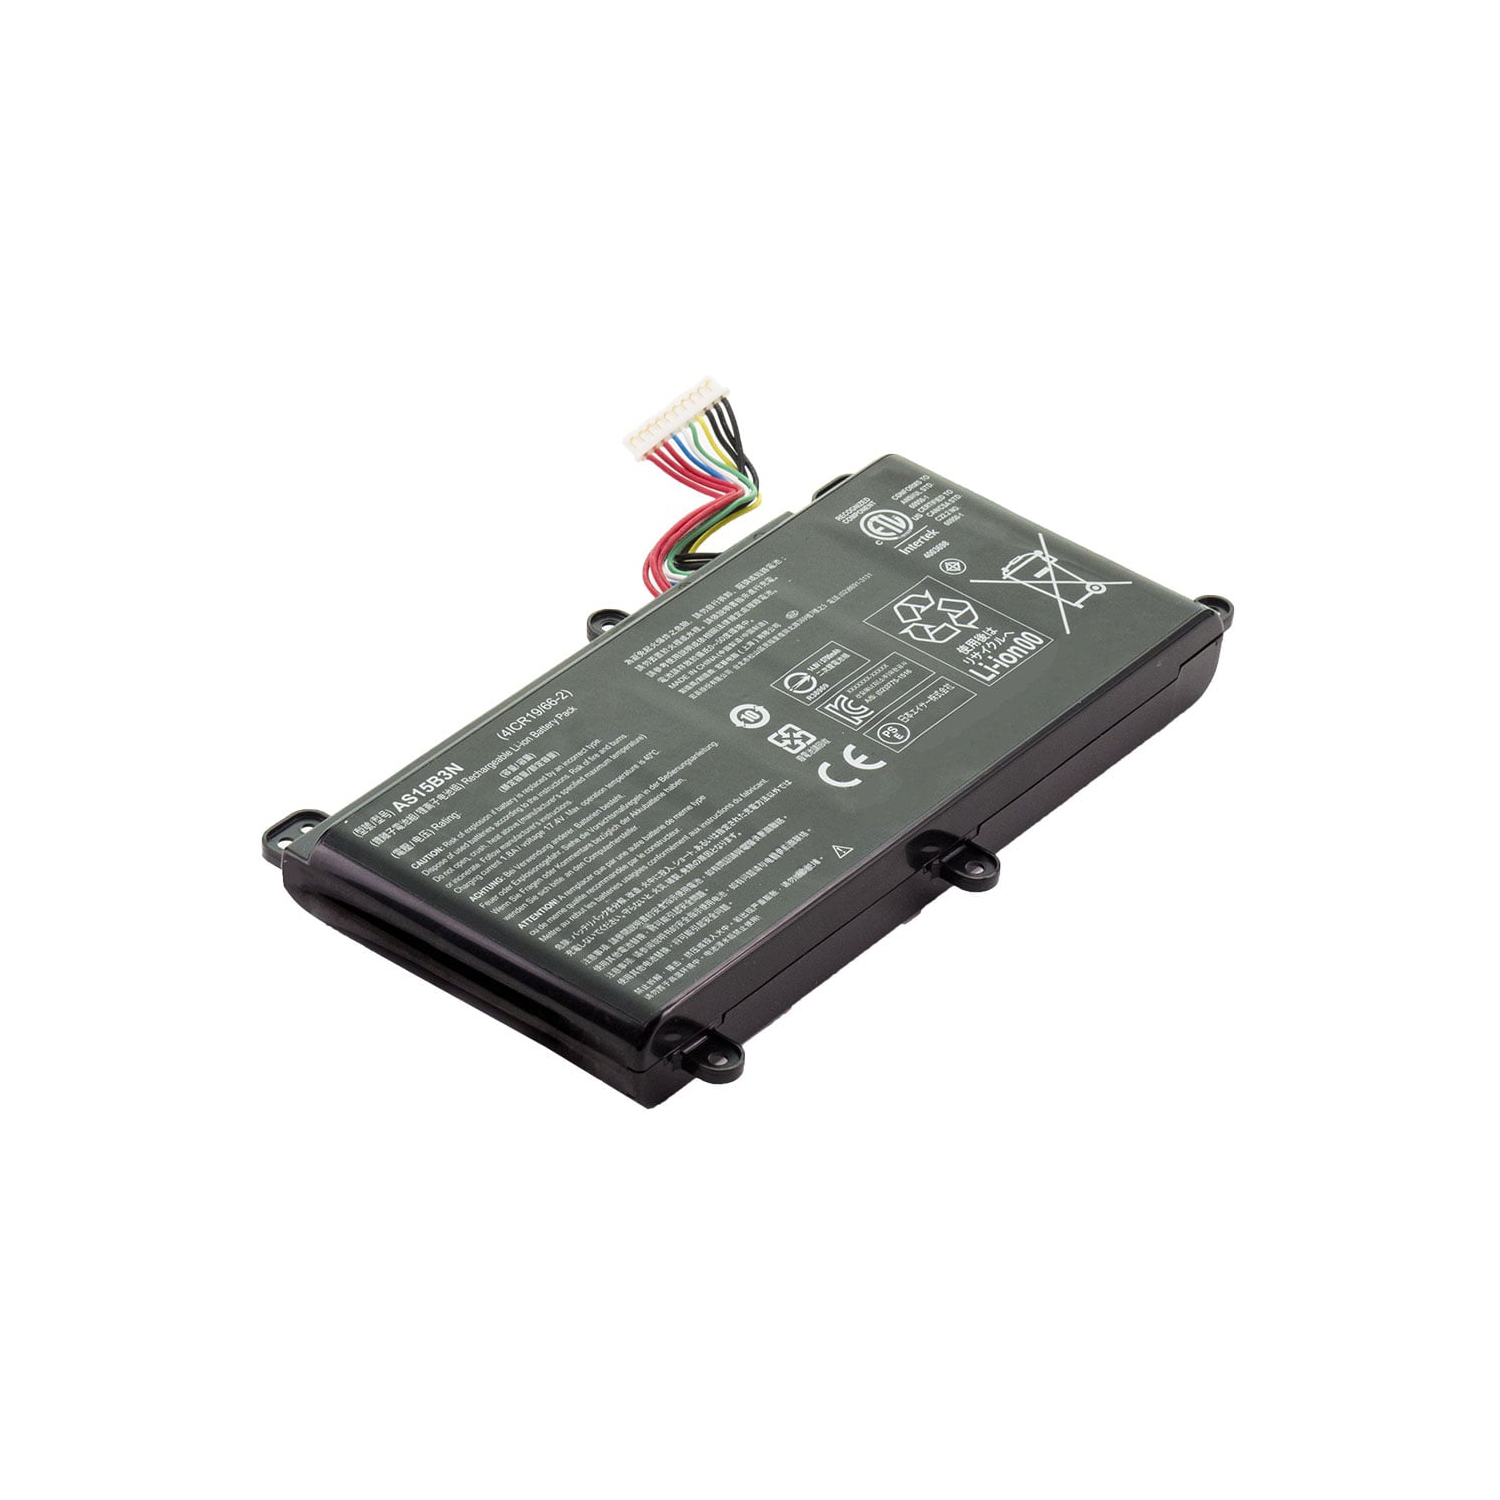 BATTDEPOT NEW Laptop Battery for Acer Predator 15 G9-593-765Q AS15B3N KT.00803.004 KT.00803.005